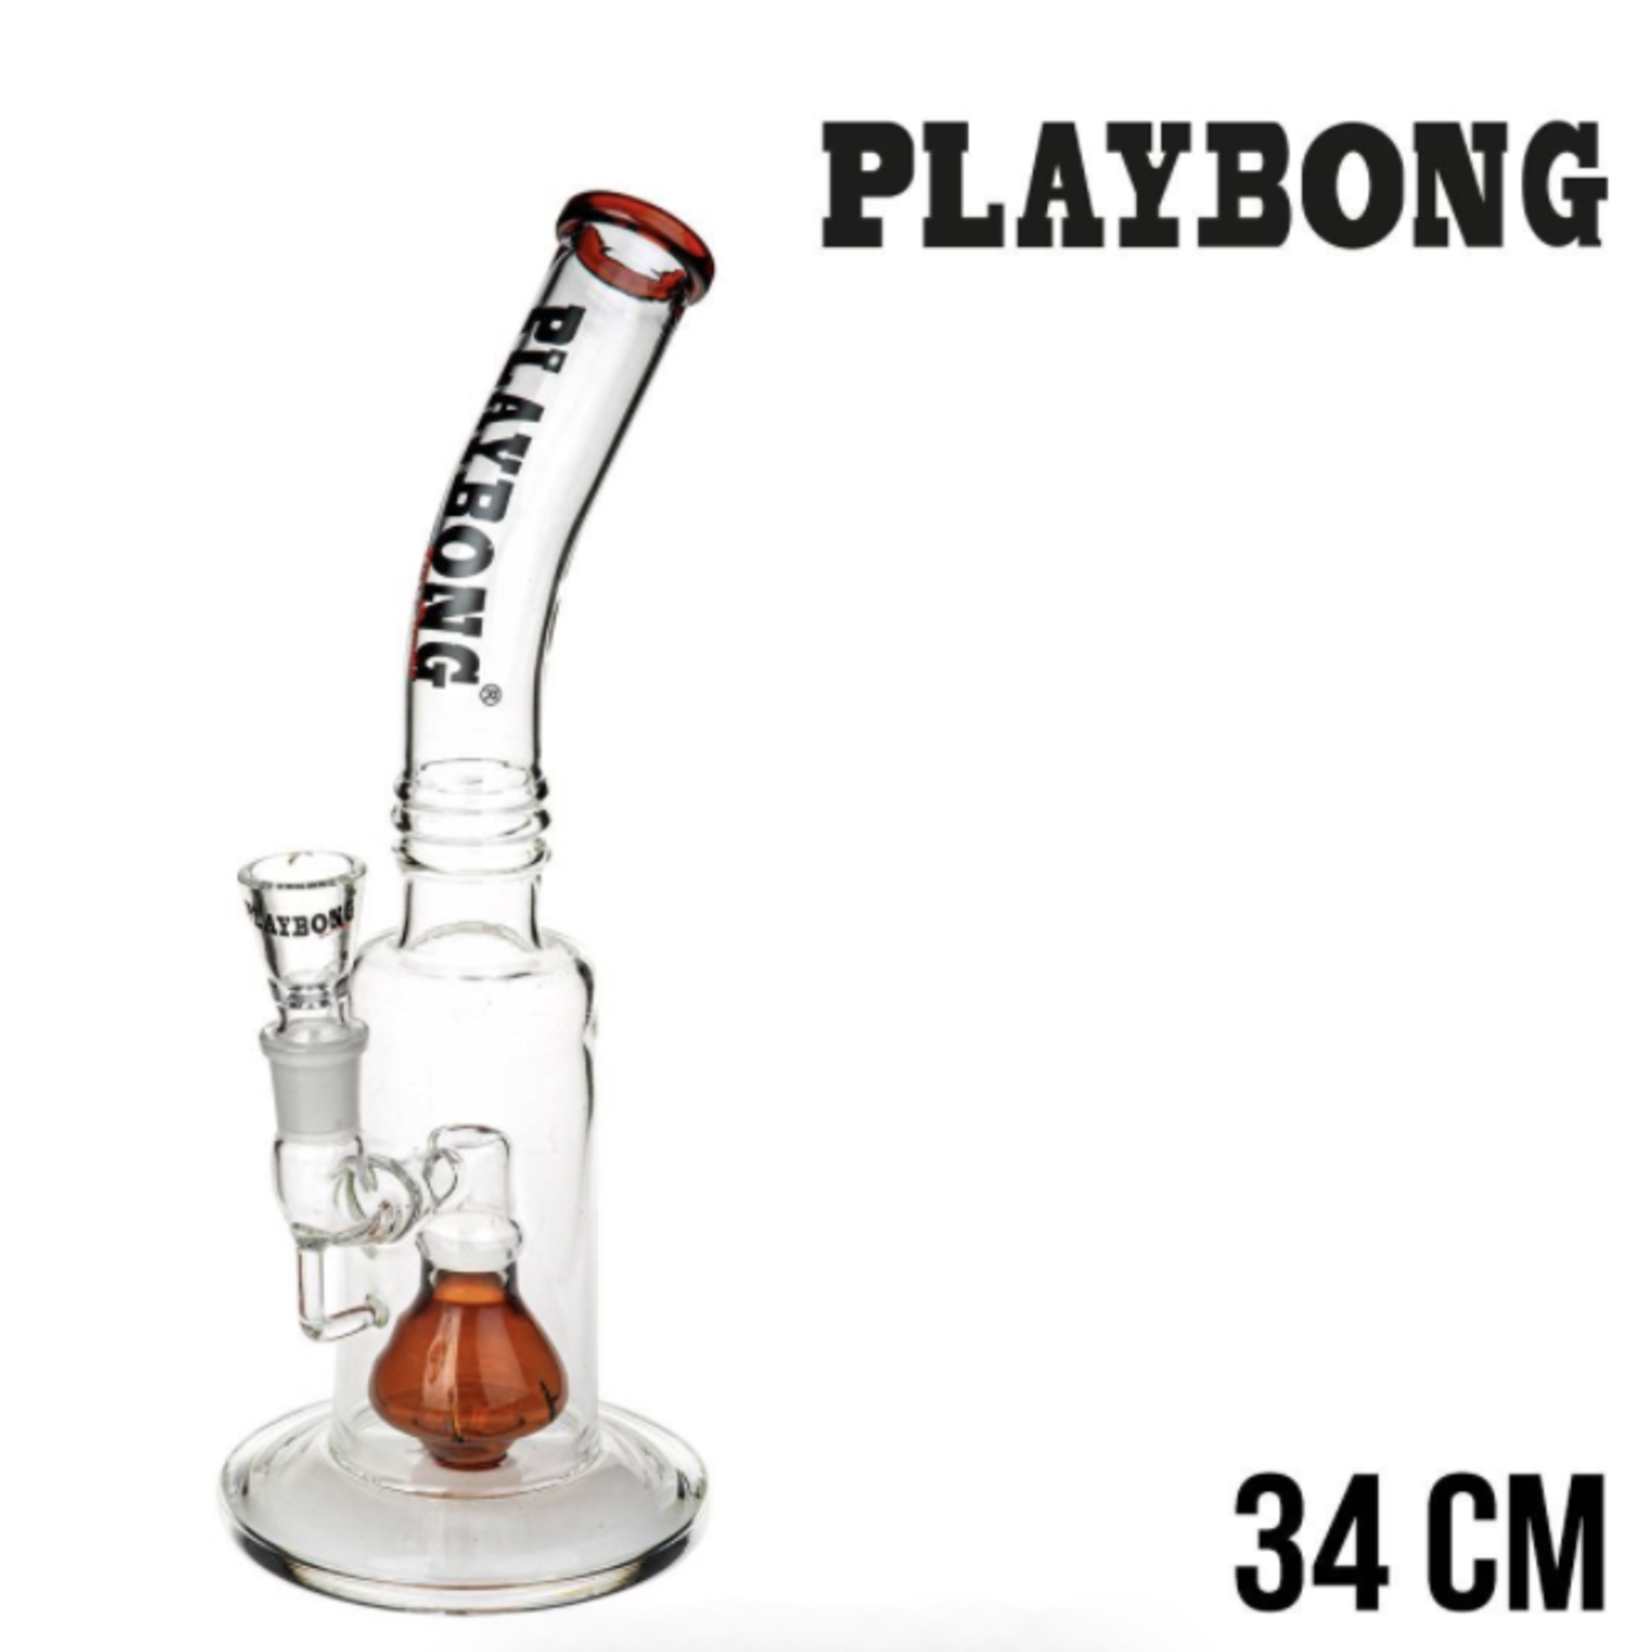 Bong - Playbong (34cm)